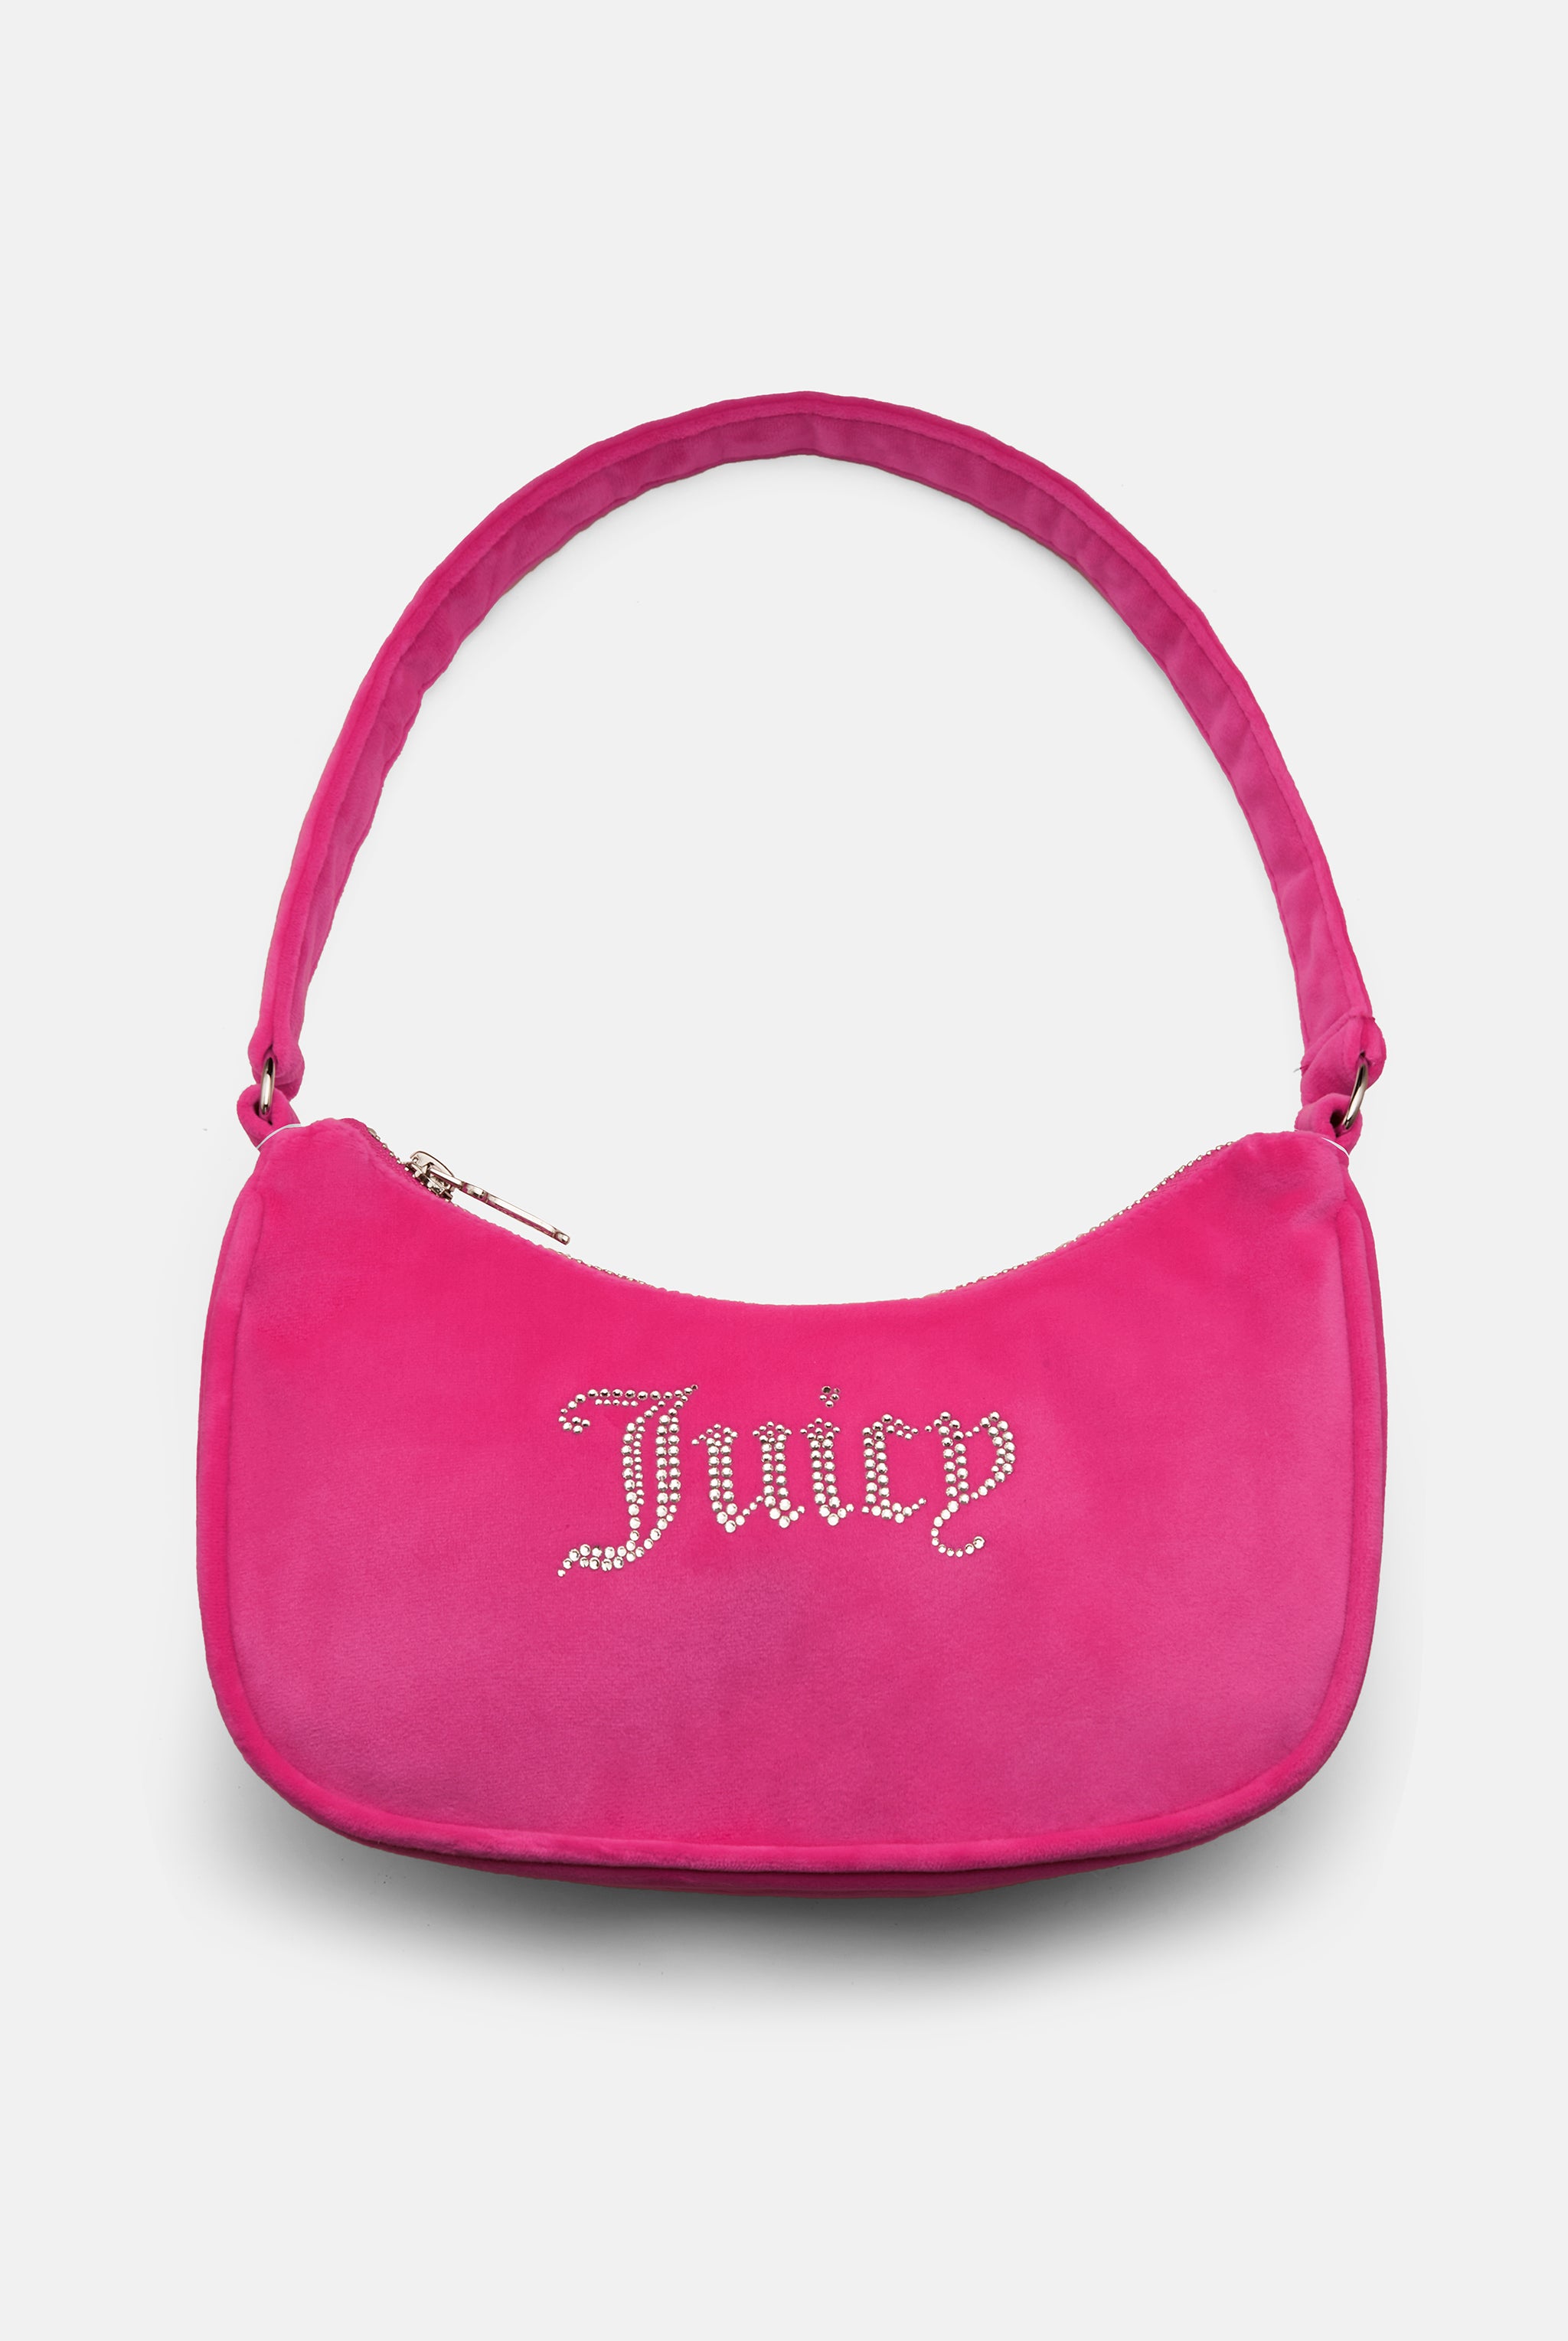 Juicy Couture Travel Cosmetic Bag Makeup Orginizer Velvet Light Pink Fancy  Heqrts Pattern Weekender Case - Etsy